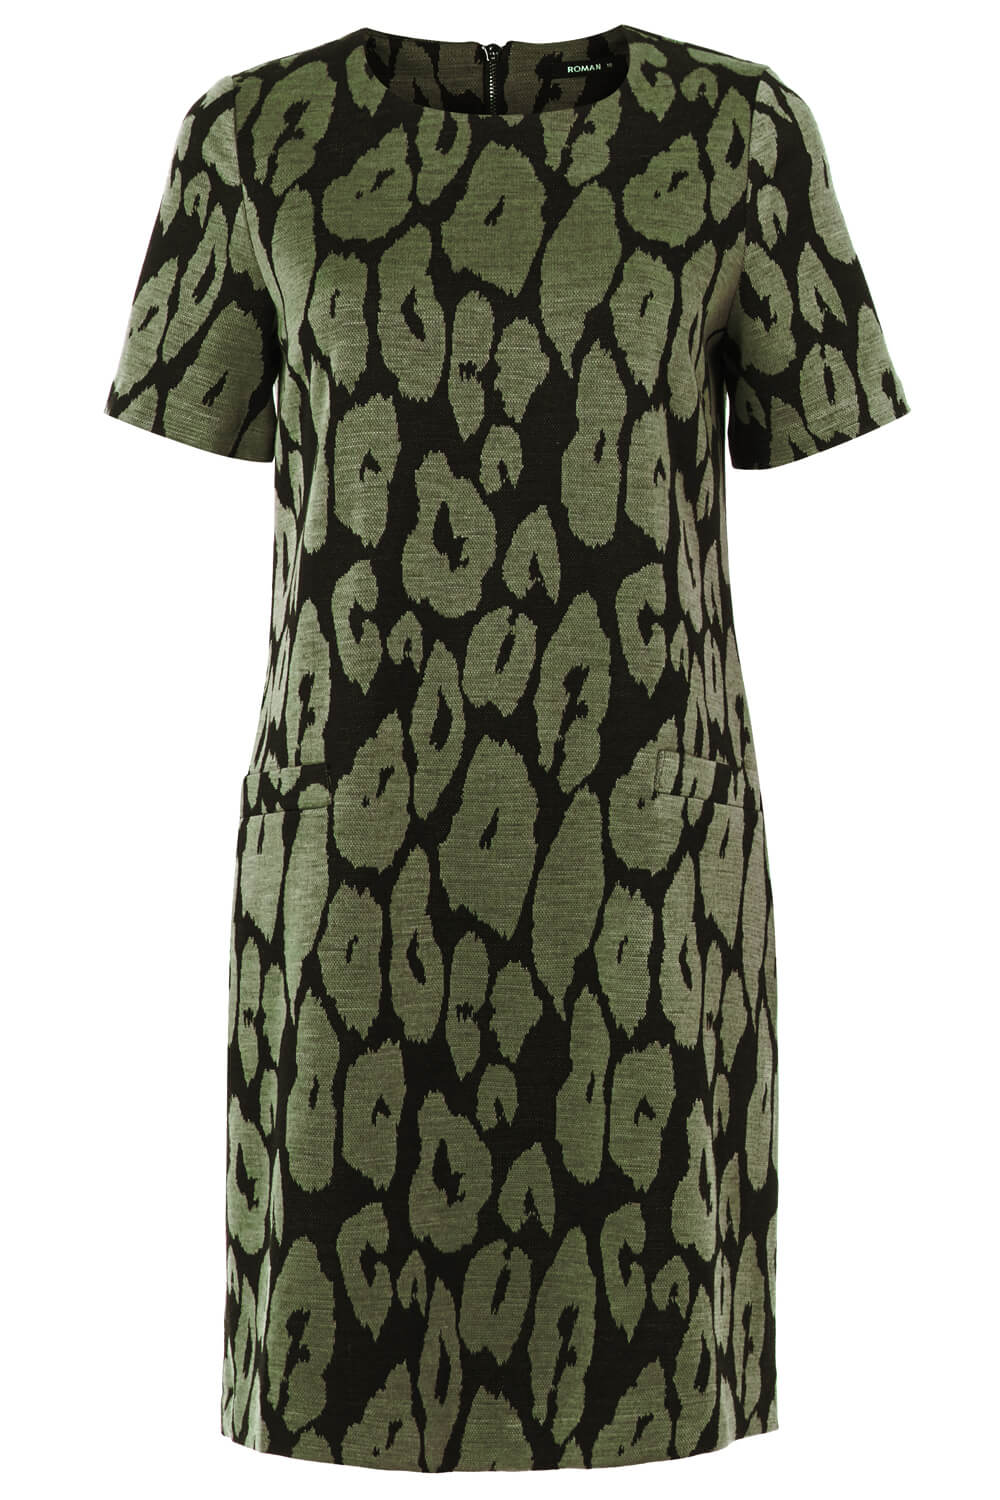 KHAKI Animal Leopard Print Shift Dress, Image 5 of 5